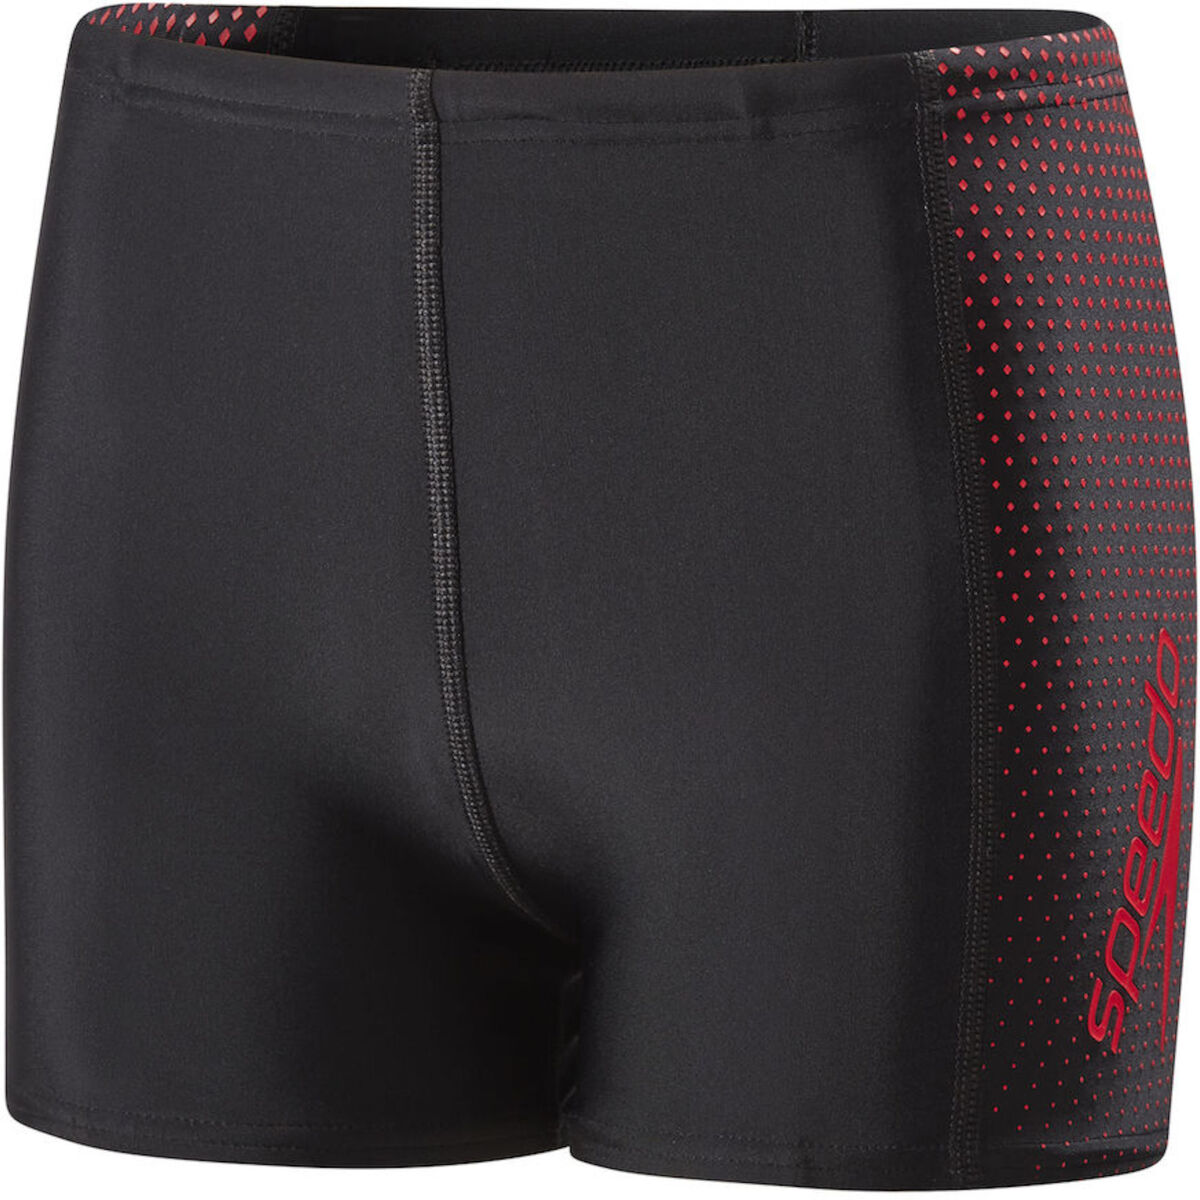 Speedo Gala Logo Panel Aquashort Shorts, Black/Red